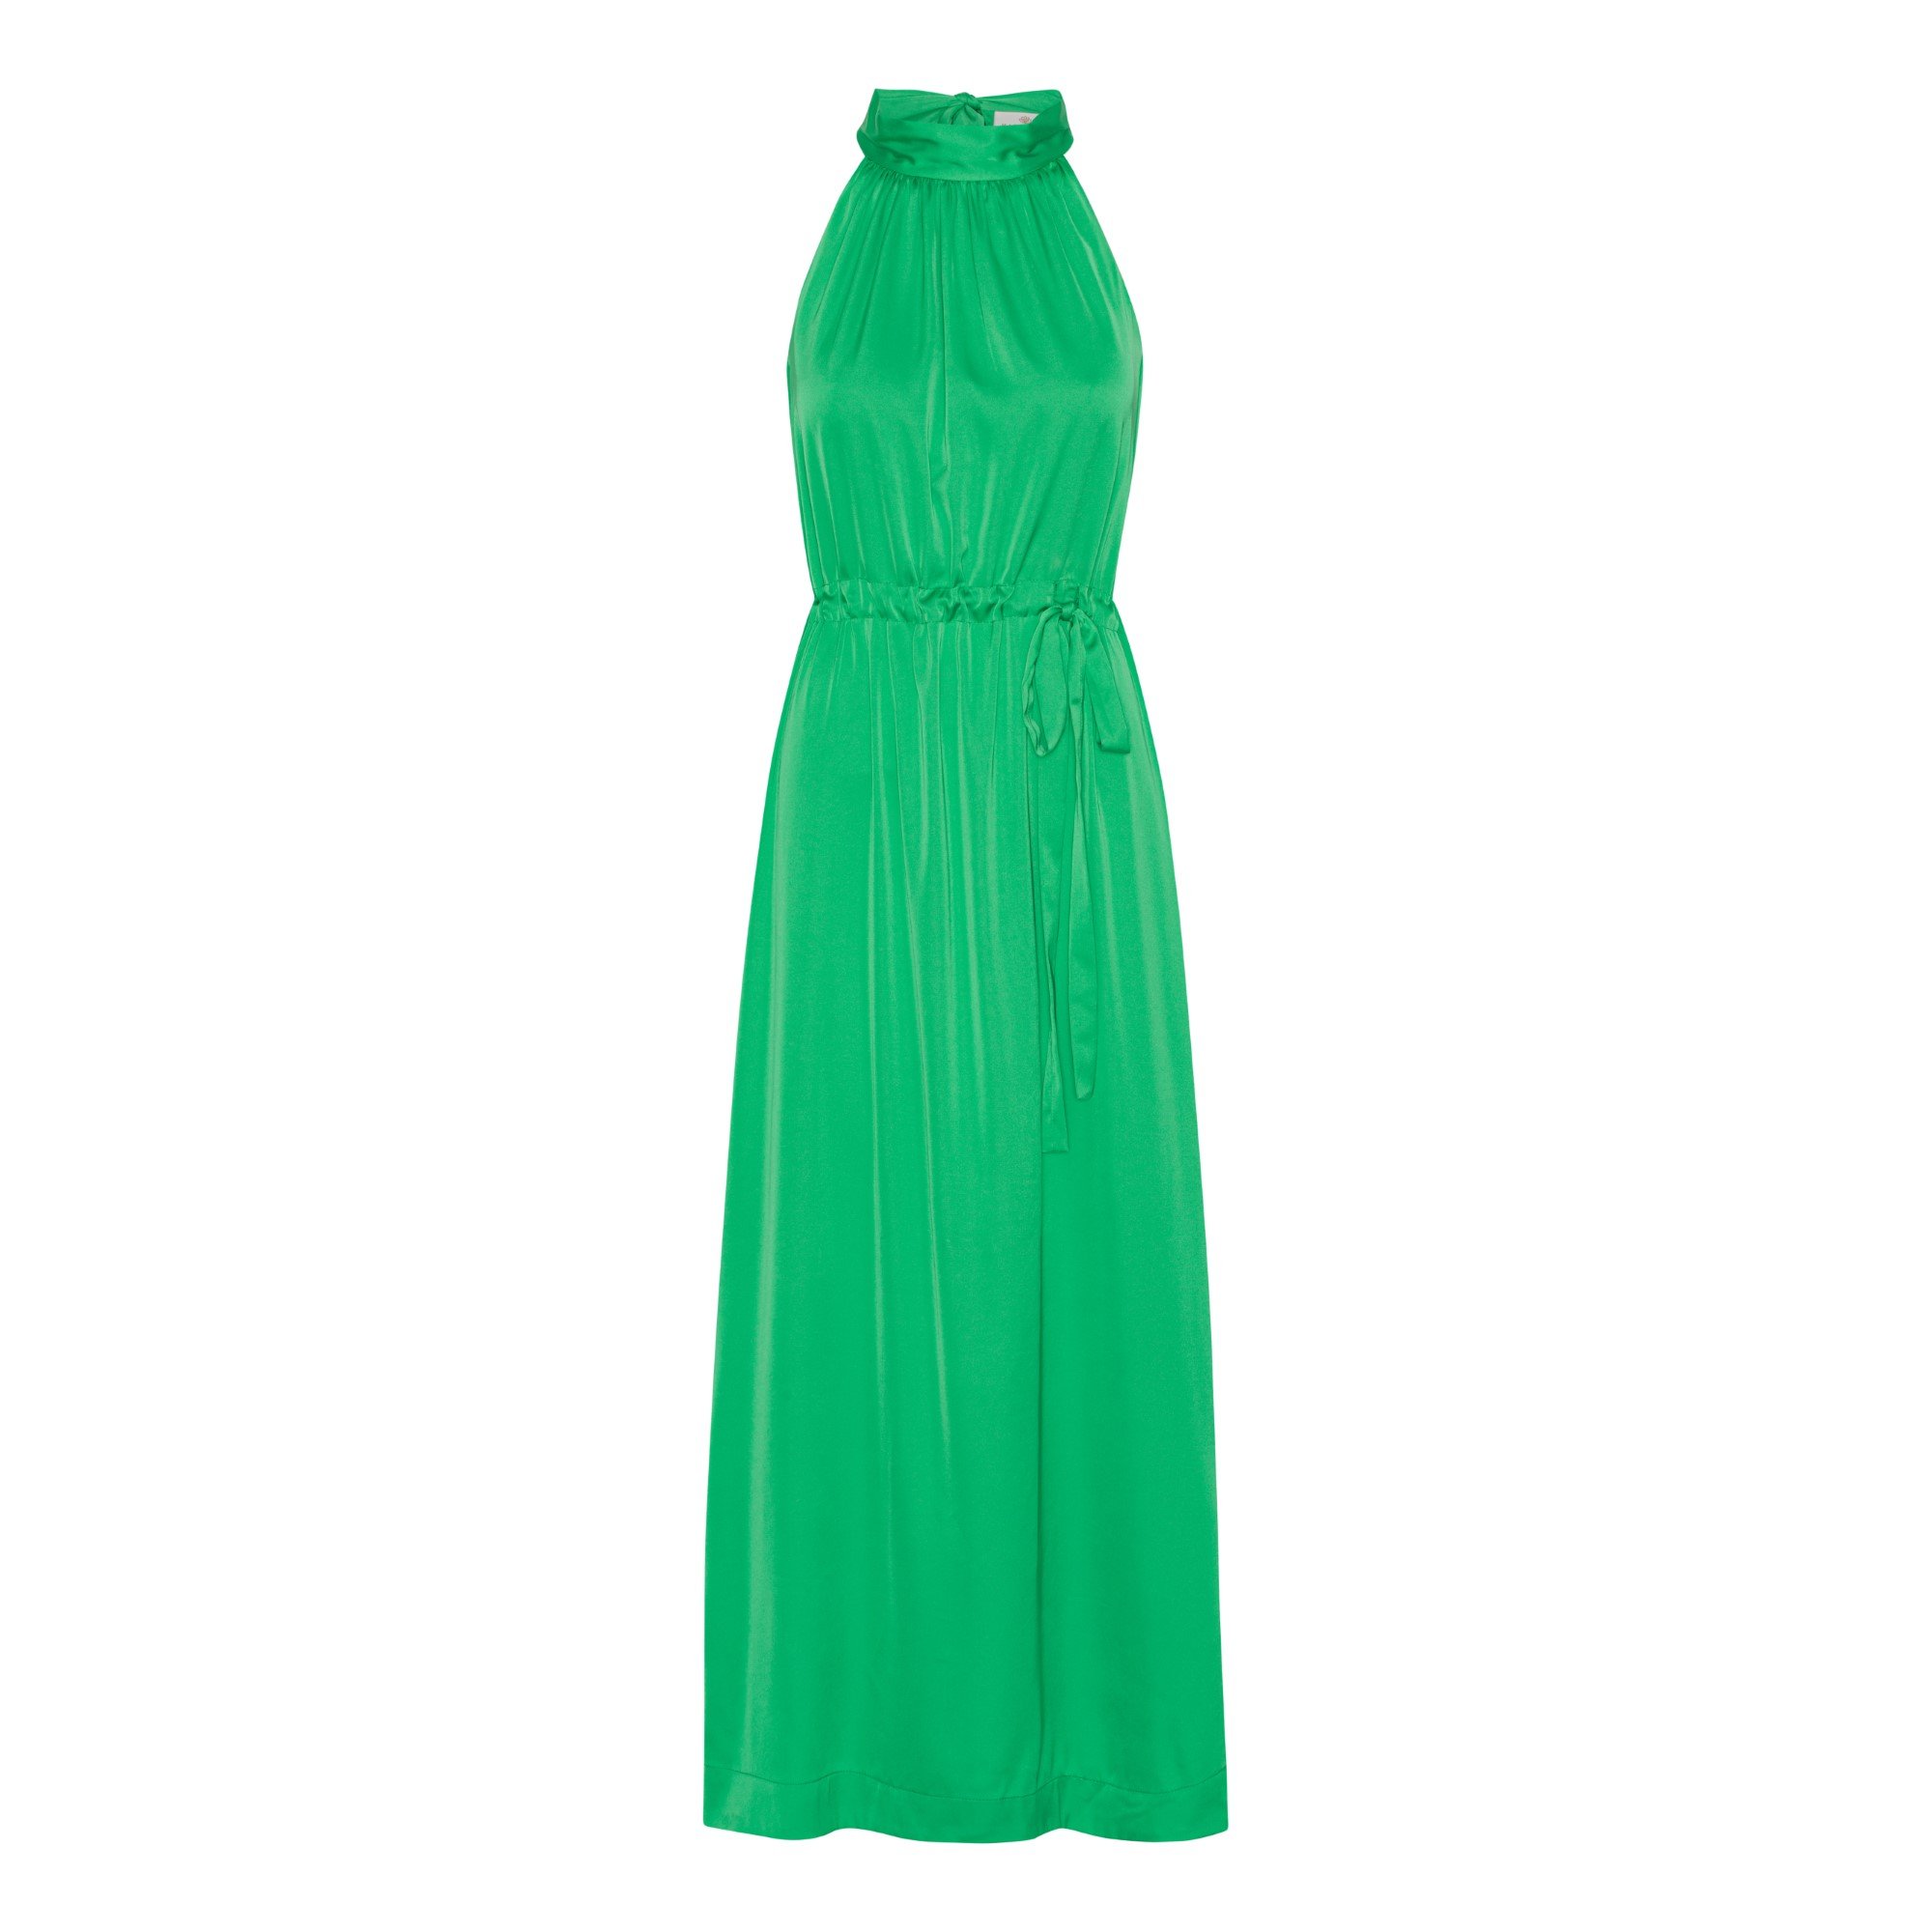 Karmamia Layla dress - emerald/ green - KJOLER VOIGT